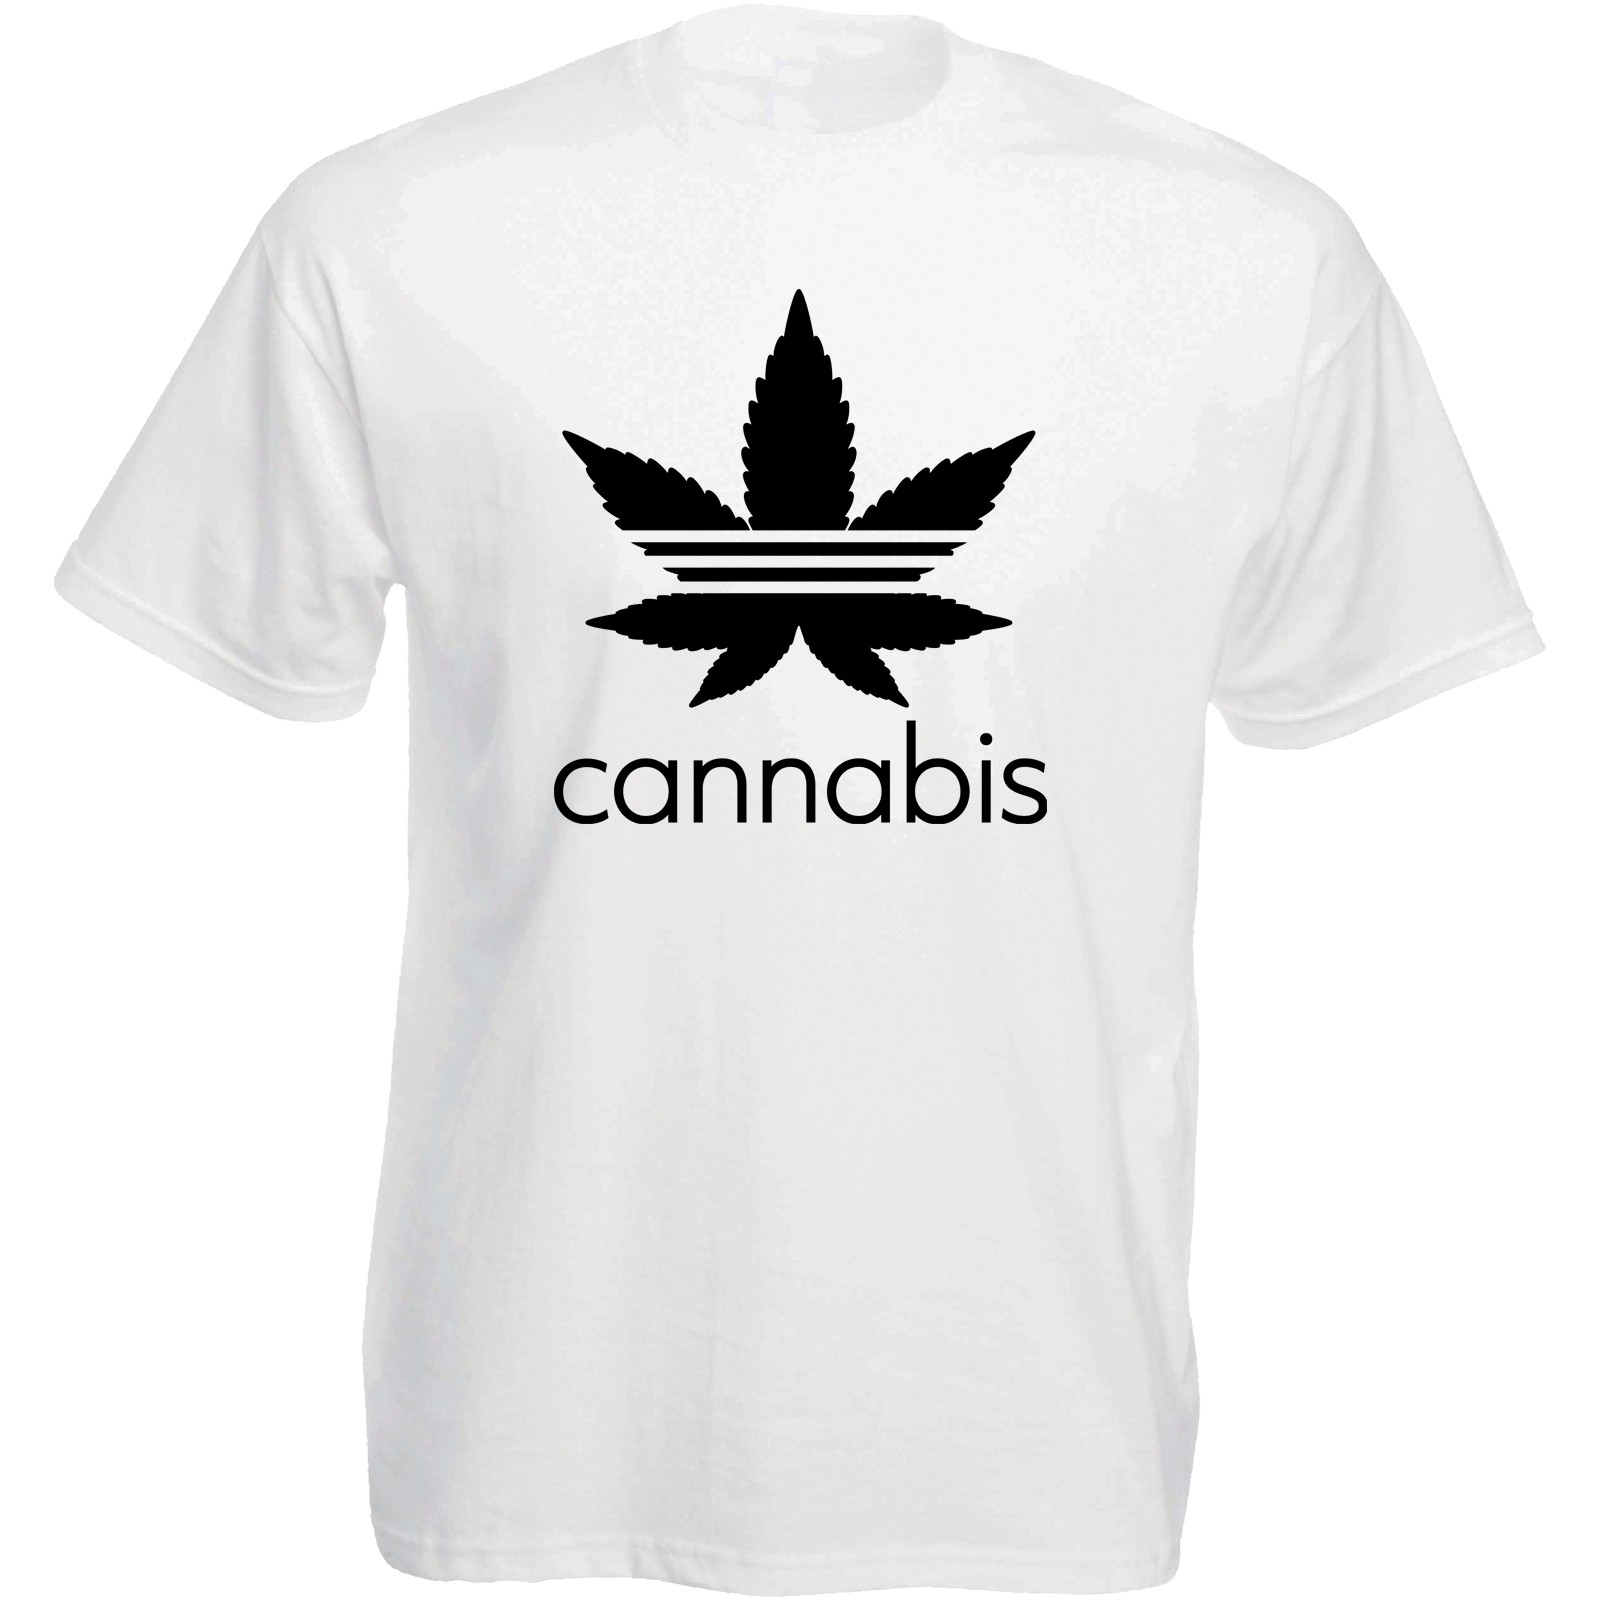 Funshirt weiß oder schwarz, als Tanktop oder Shirt - Cannabis